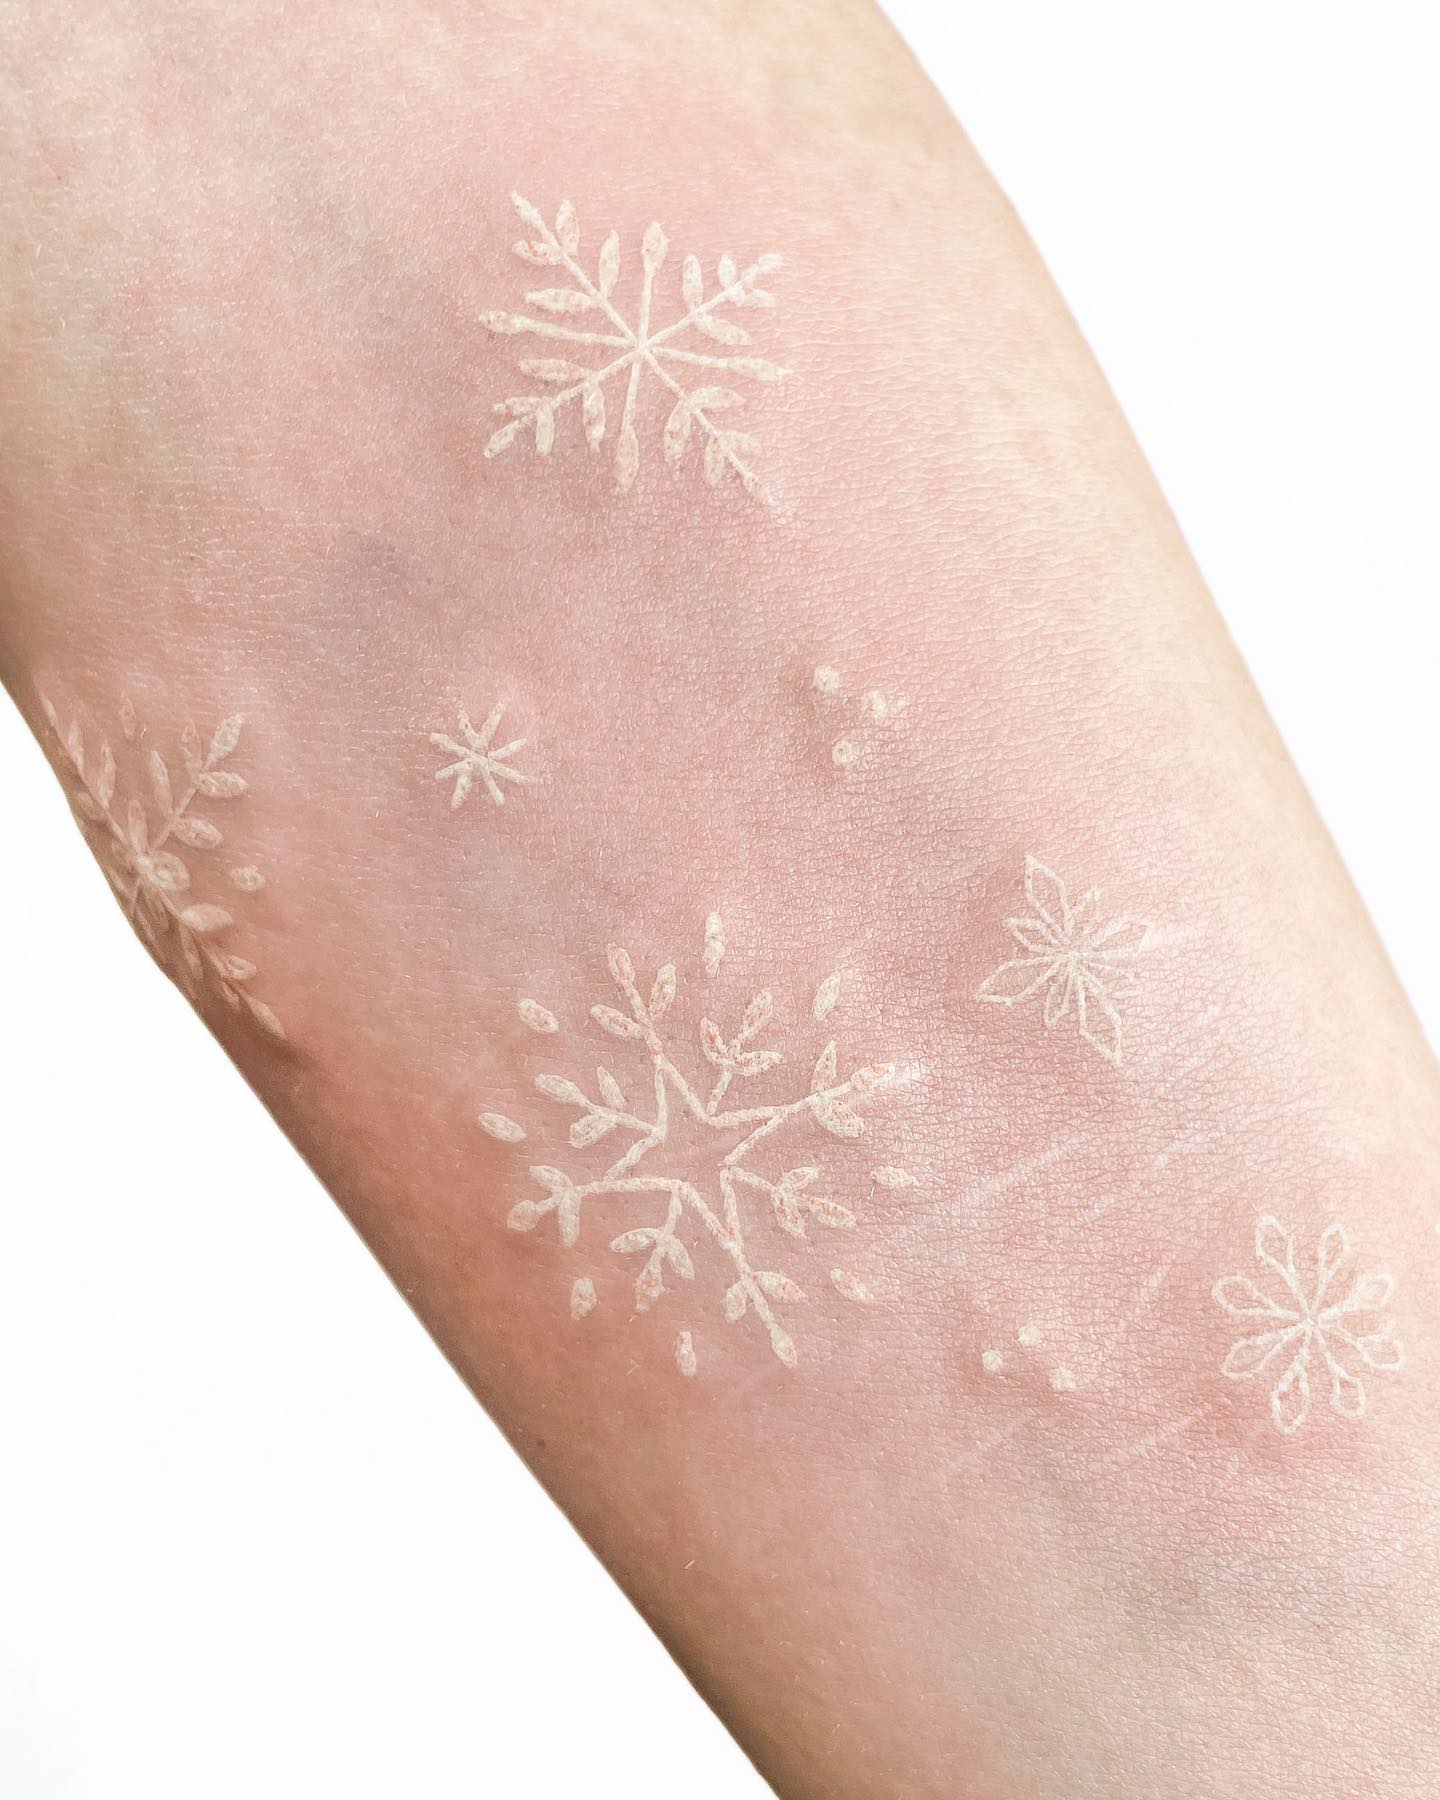 Tatuaje de copo de nieve con tinta blanca